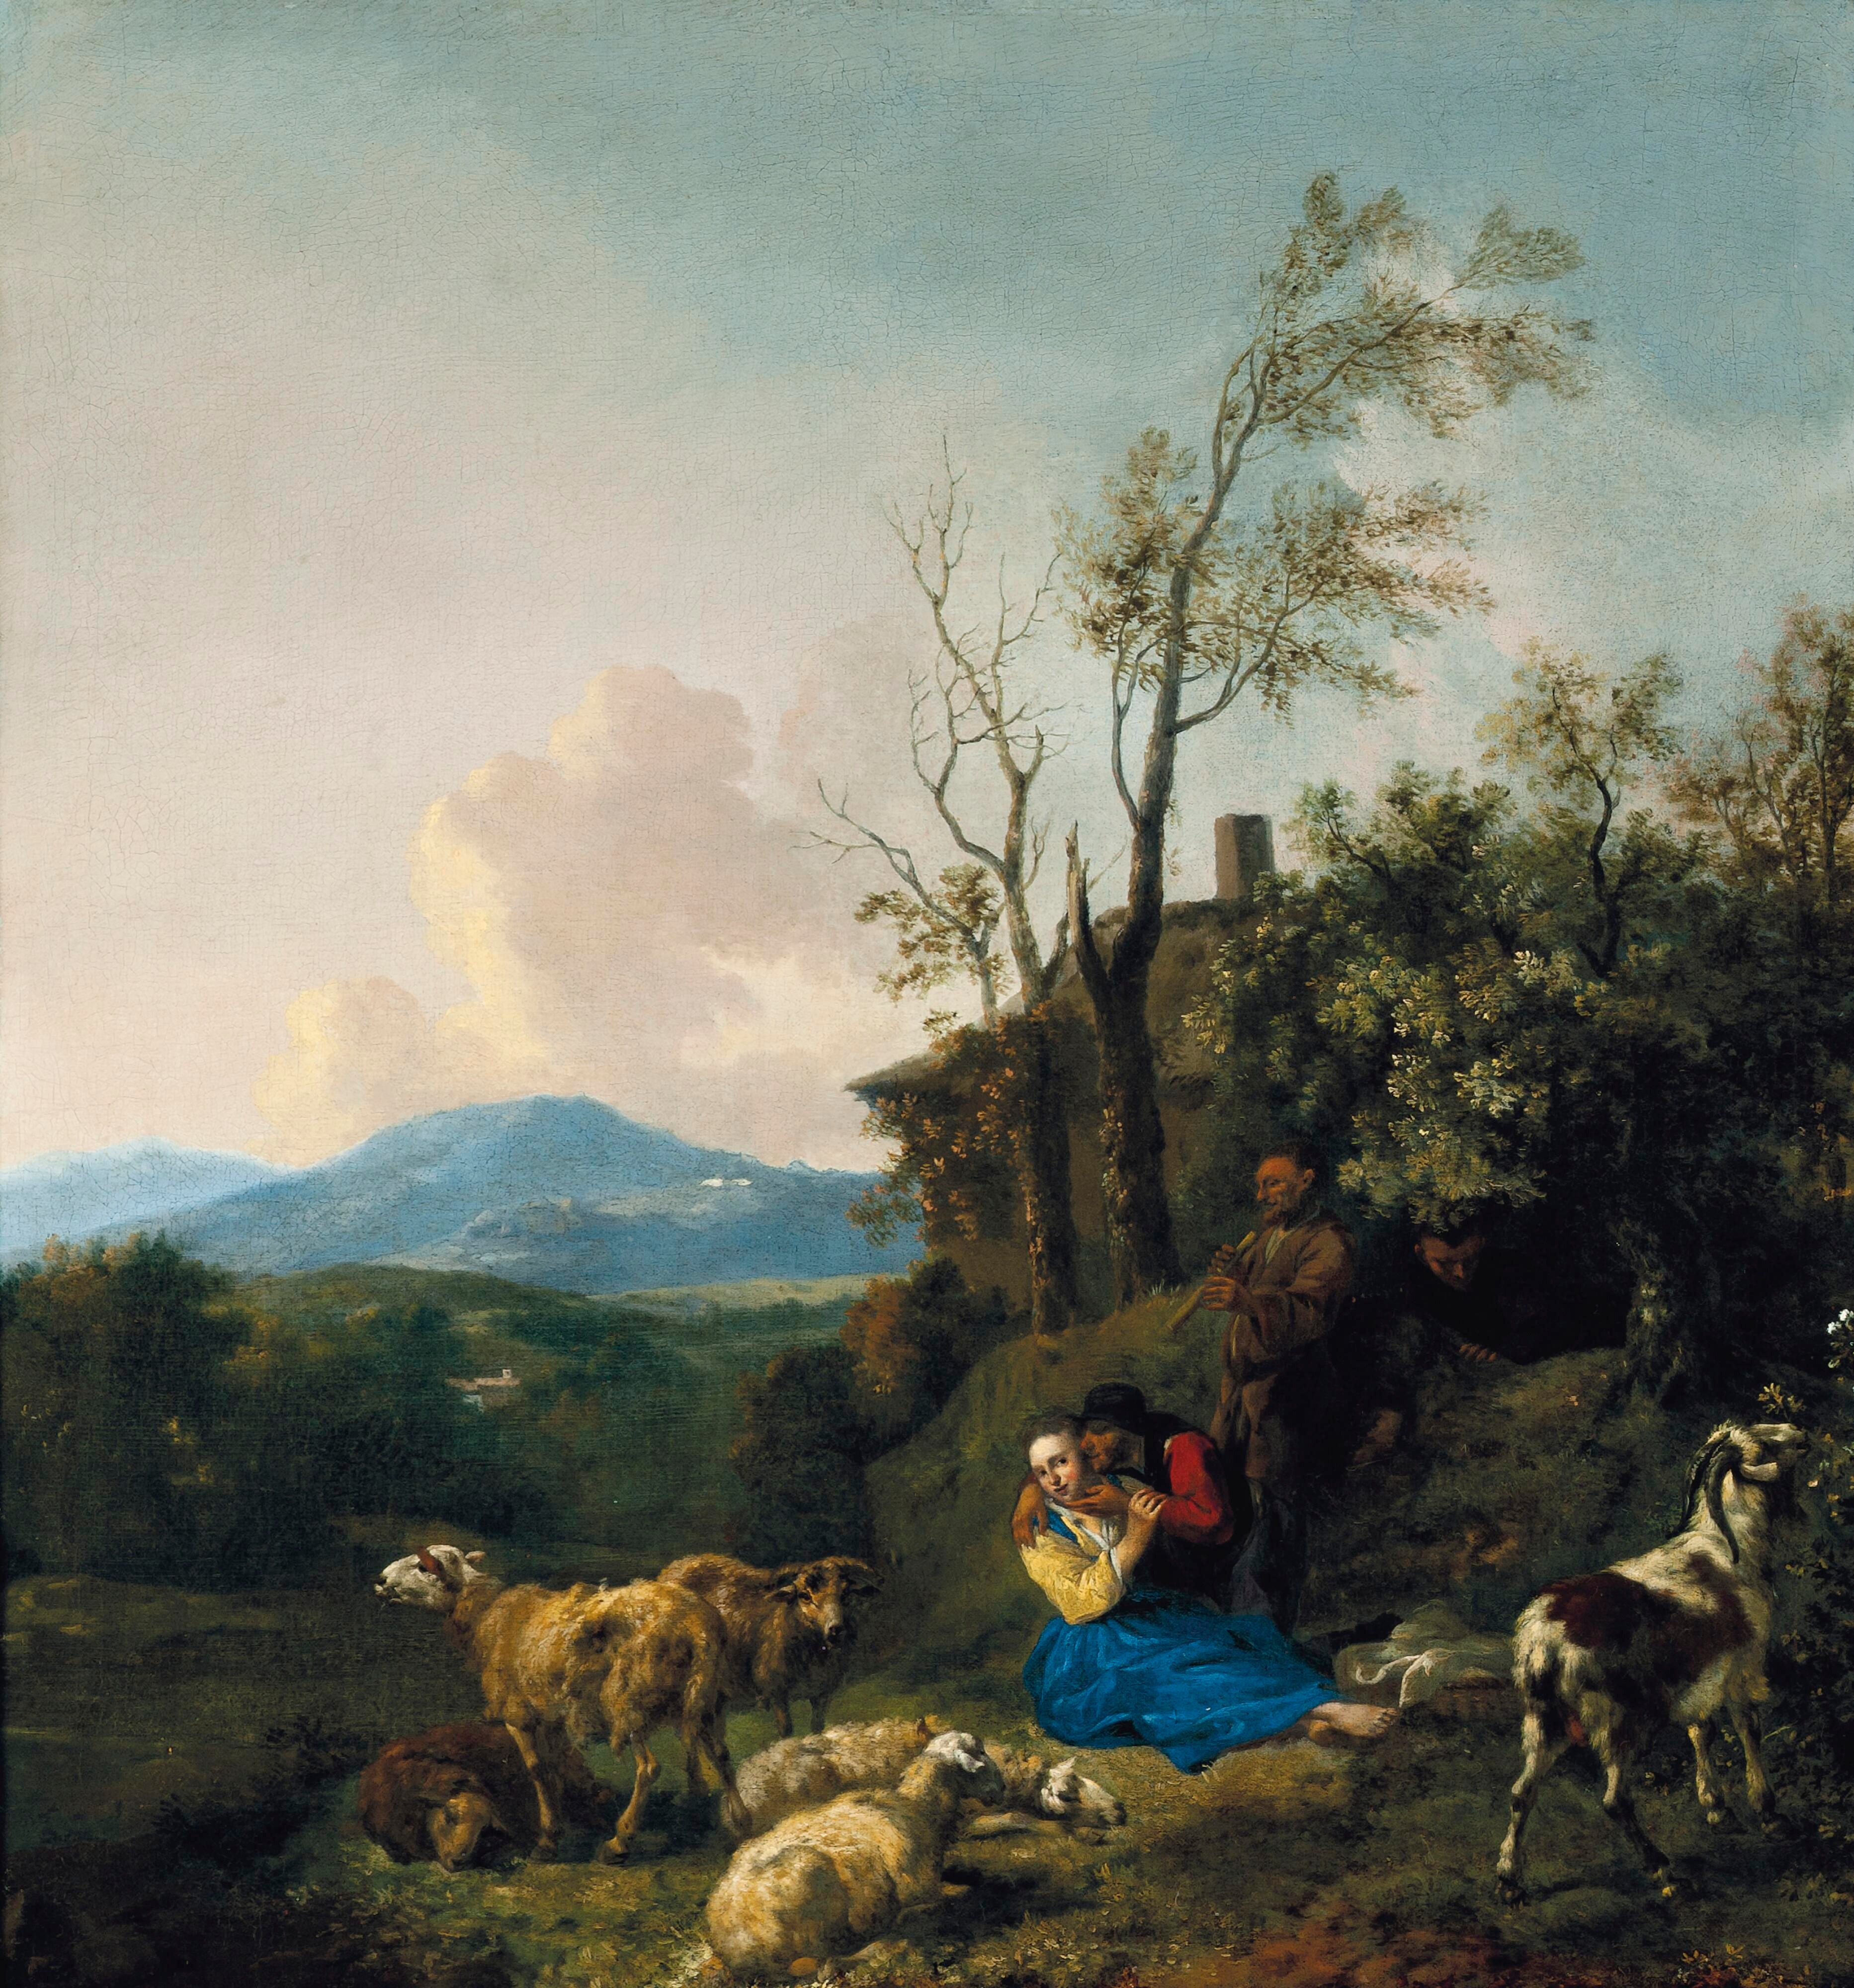 Jan-Baptist-Wolfaerts - Shepherds and their flock in a vast landscape